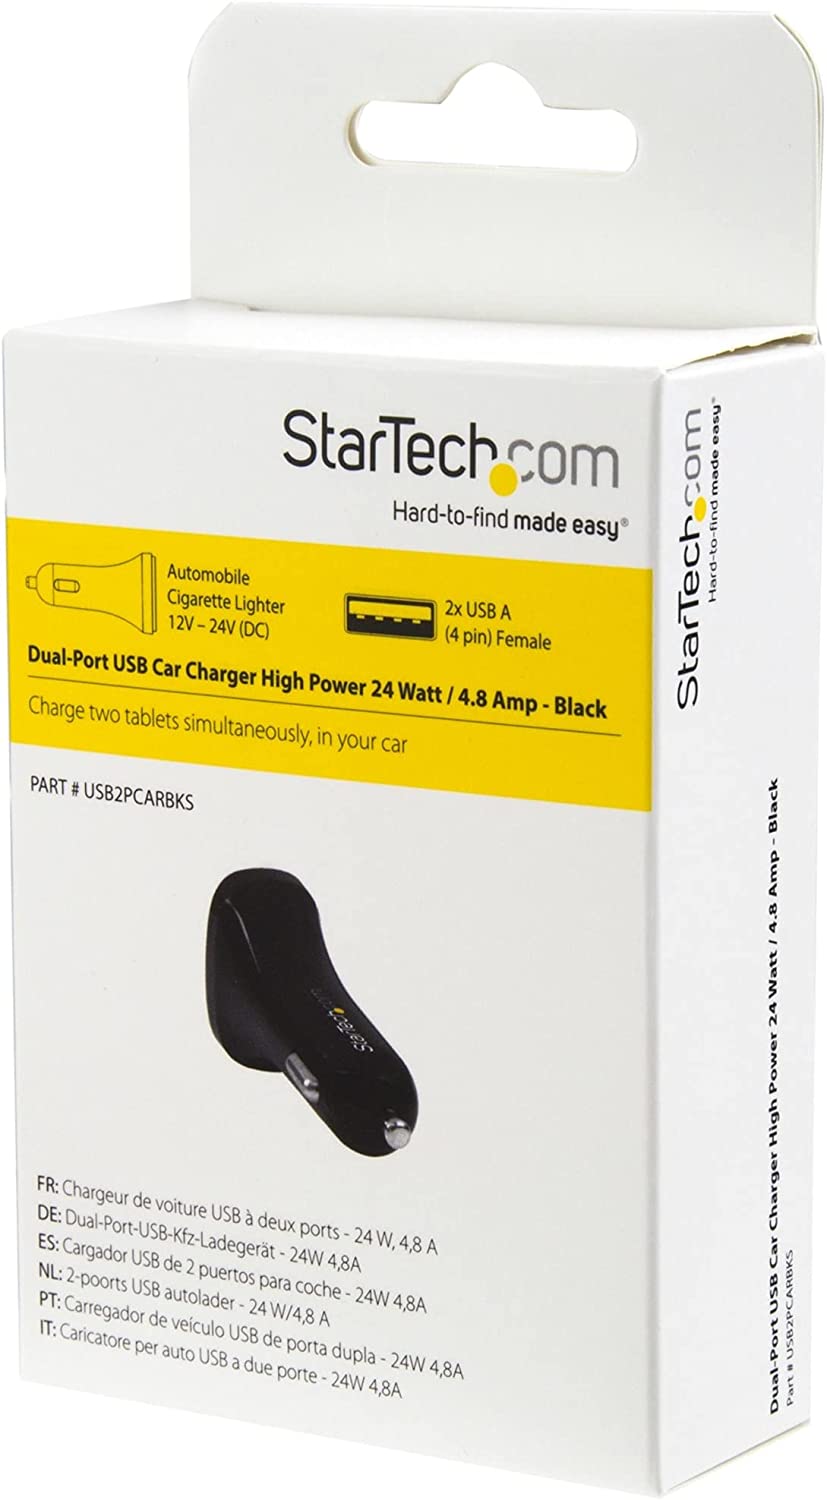 StarTech.com Dual Port USB Car Charger - High Power 24W/4.8A - Black - 2-Port USB Car Charger - Charge Two Tablets at Once (USB2PCARBKS)